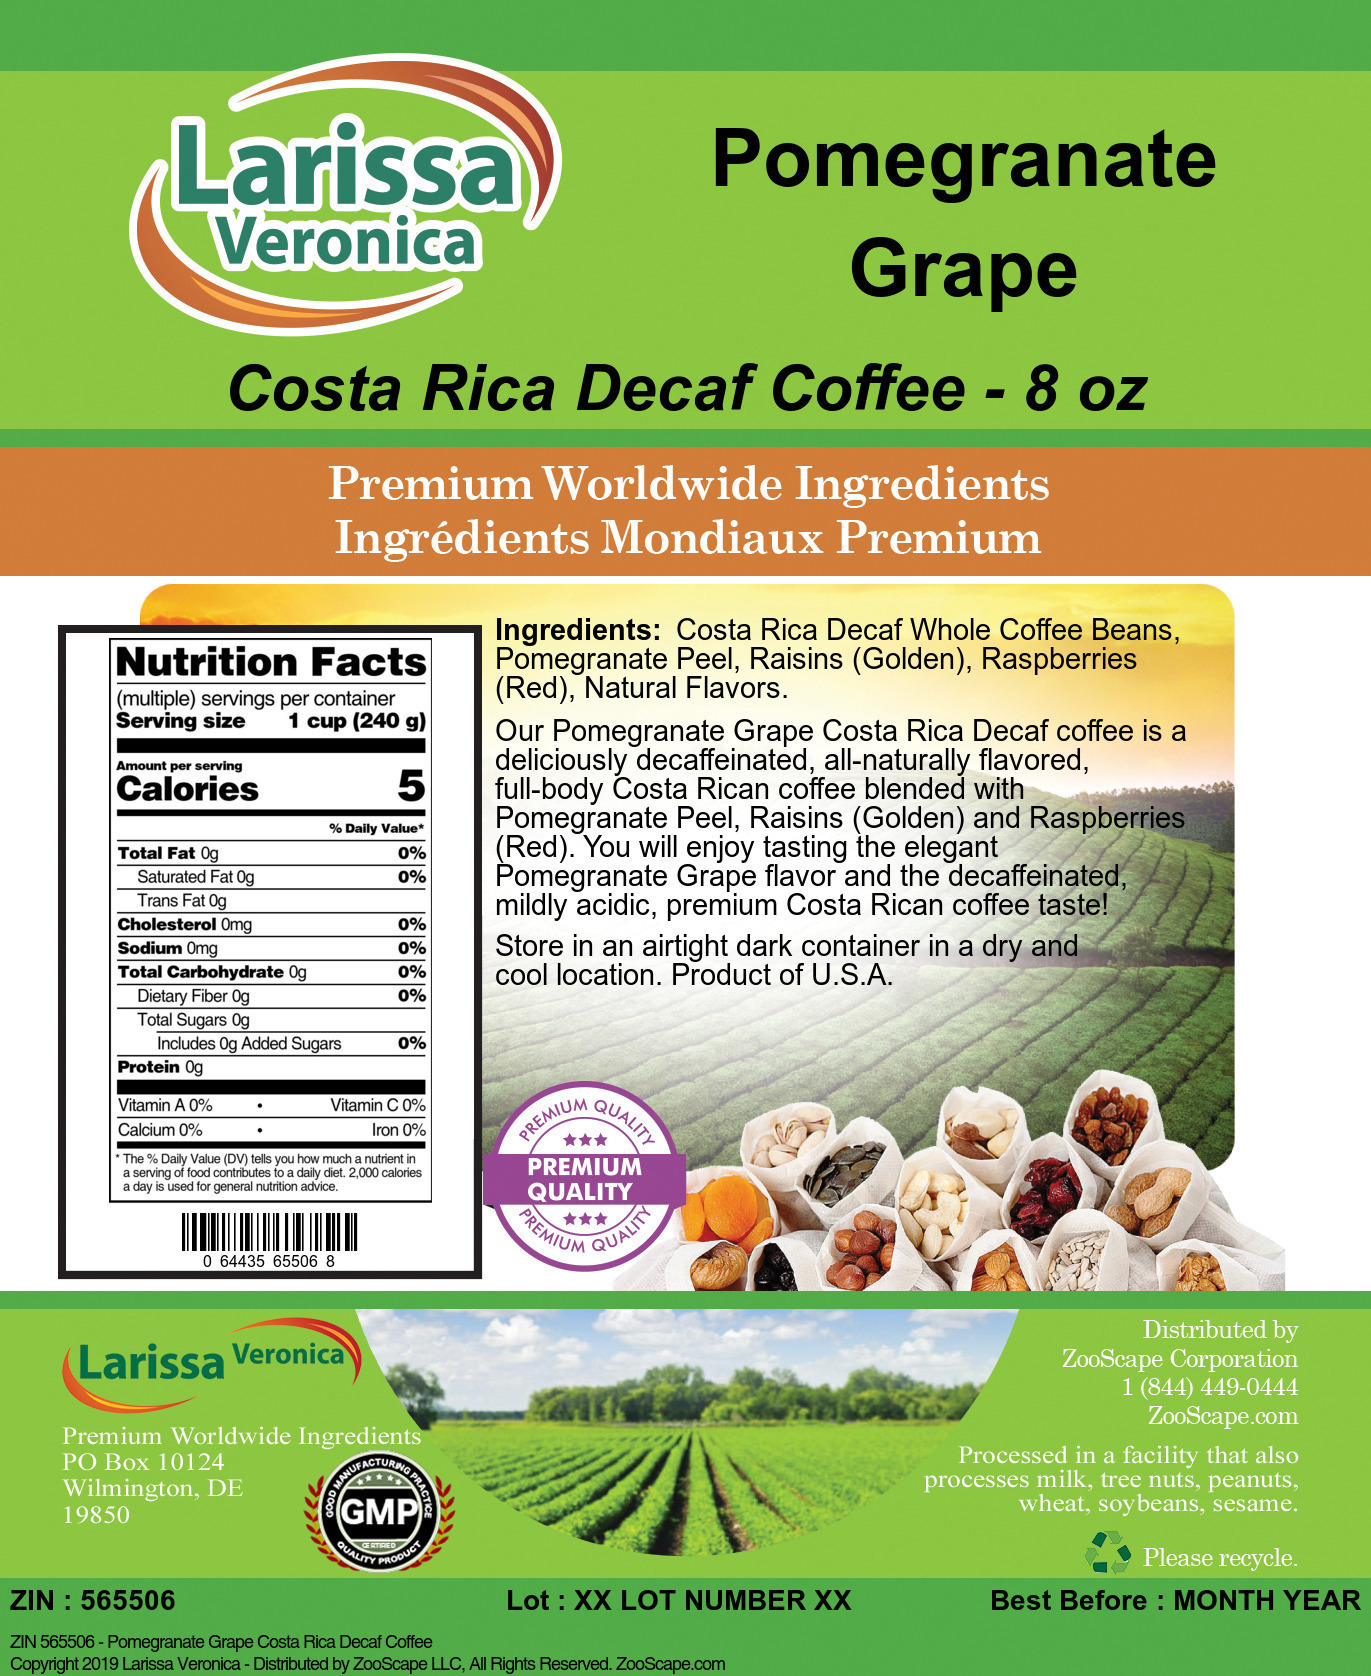 Pomegranate Grape Costa Rica Decaf Coffee - Label